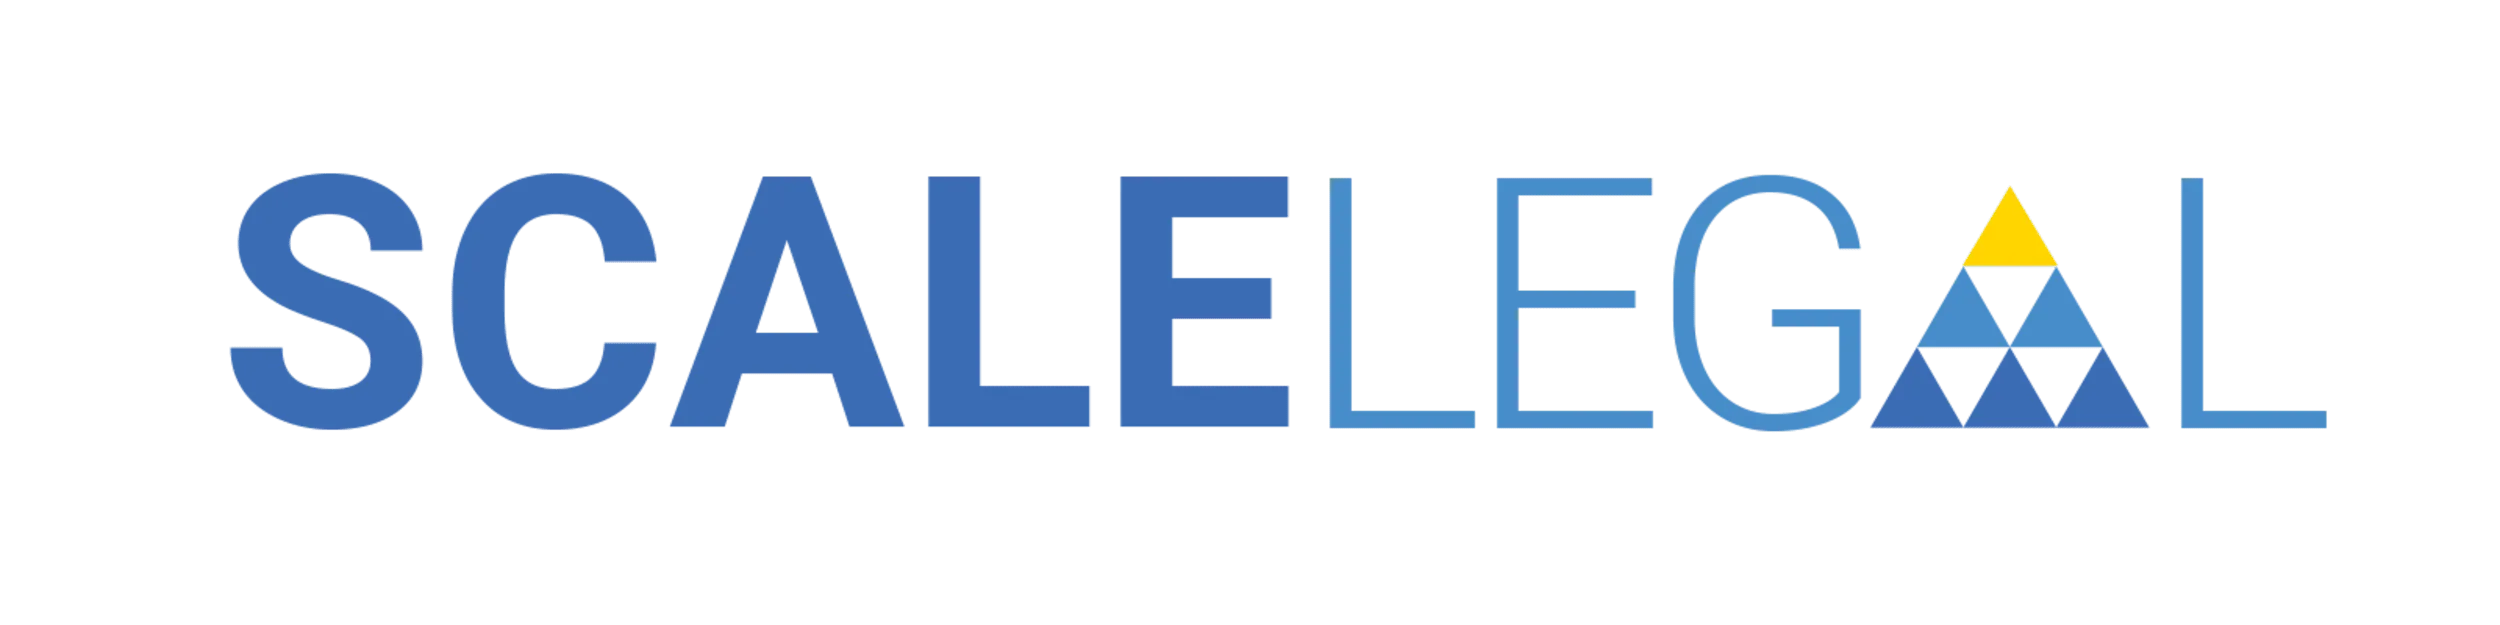 scalelegal-logo